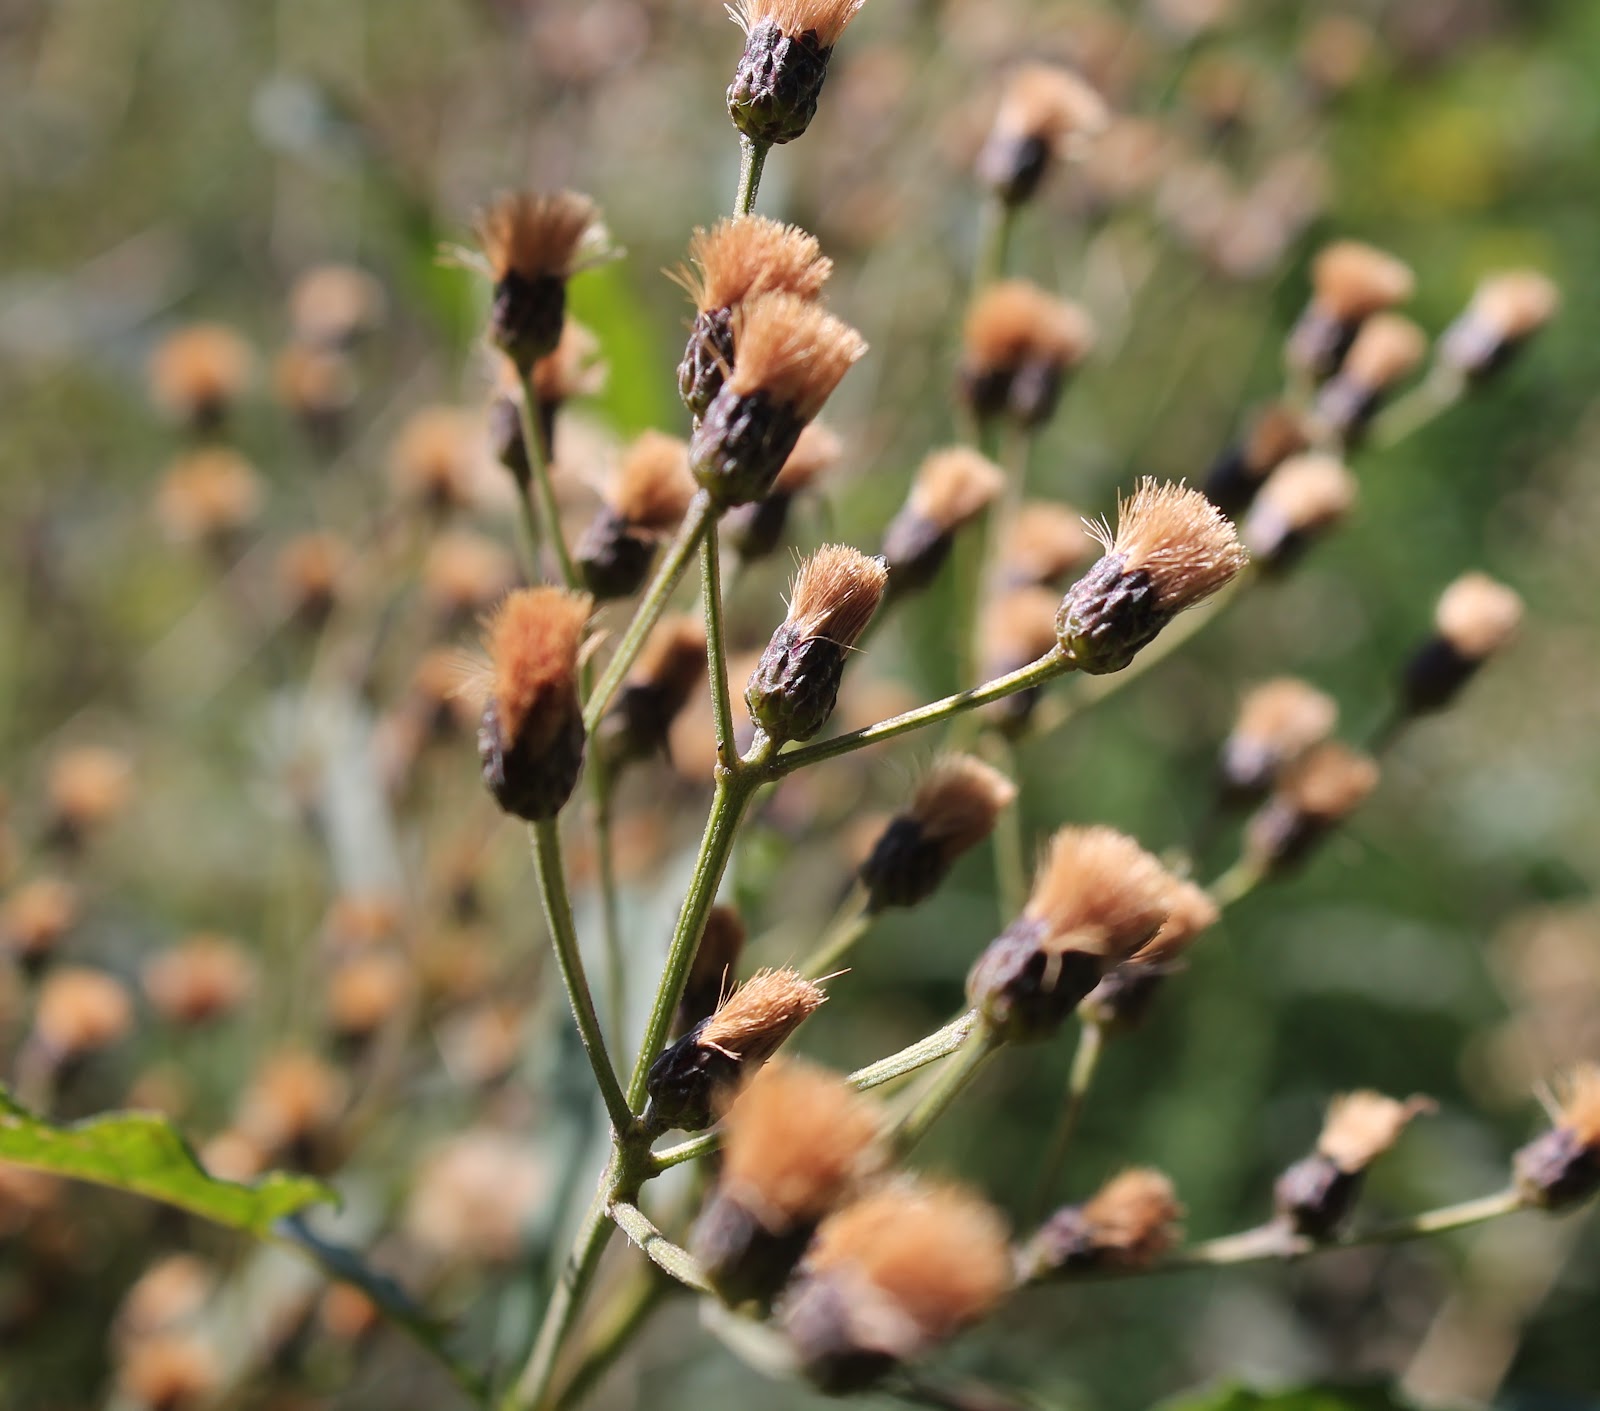 FOLKWAYS NOTEBOOK: WEEDS FOR SALE